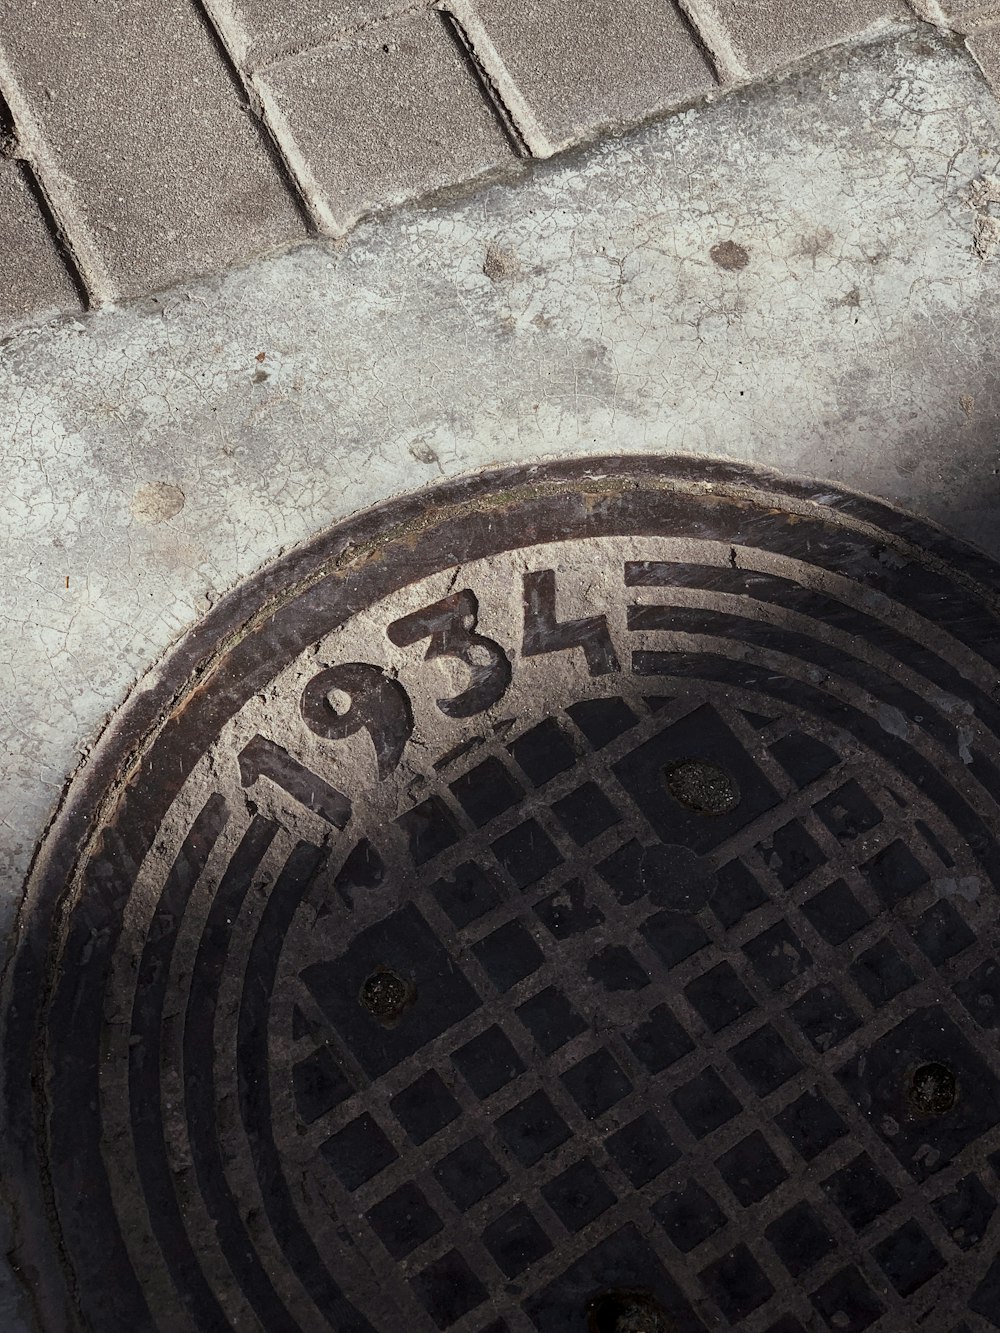 1934 manhole cover on floor